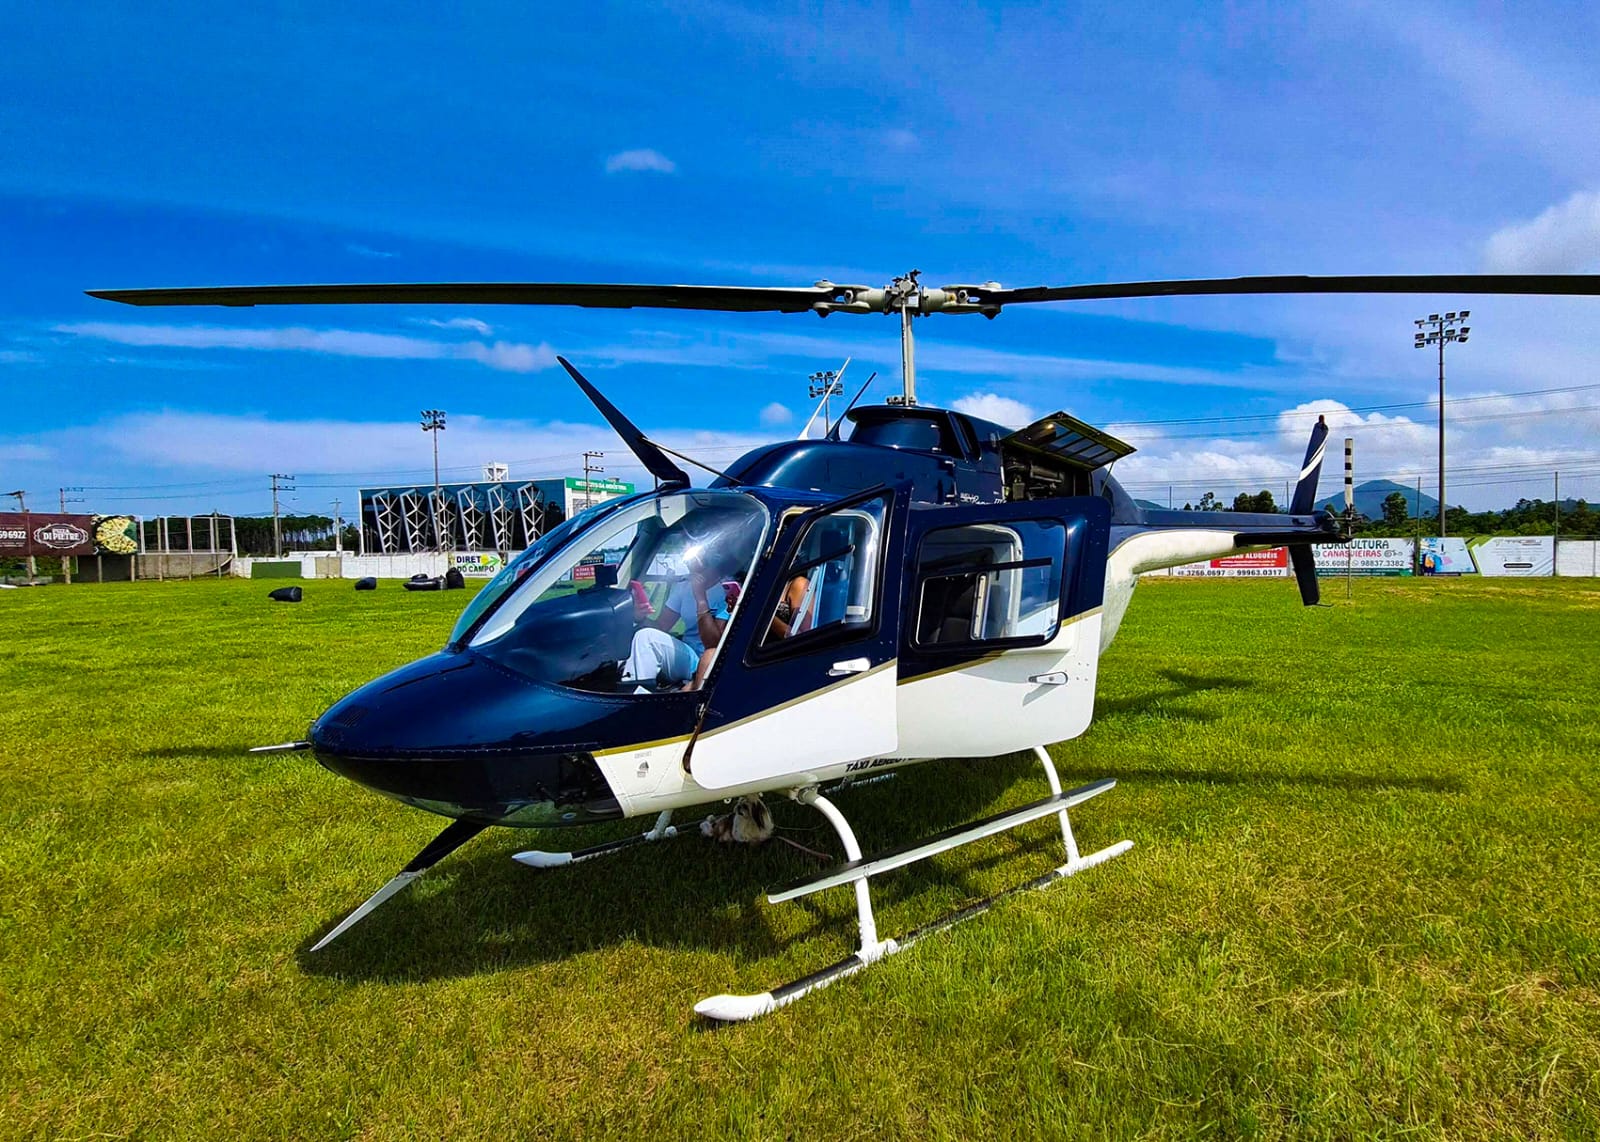 Passeio de helicóptero em Florianópolis Gold Exclusivo